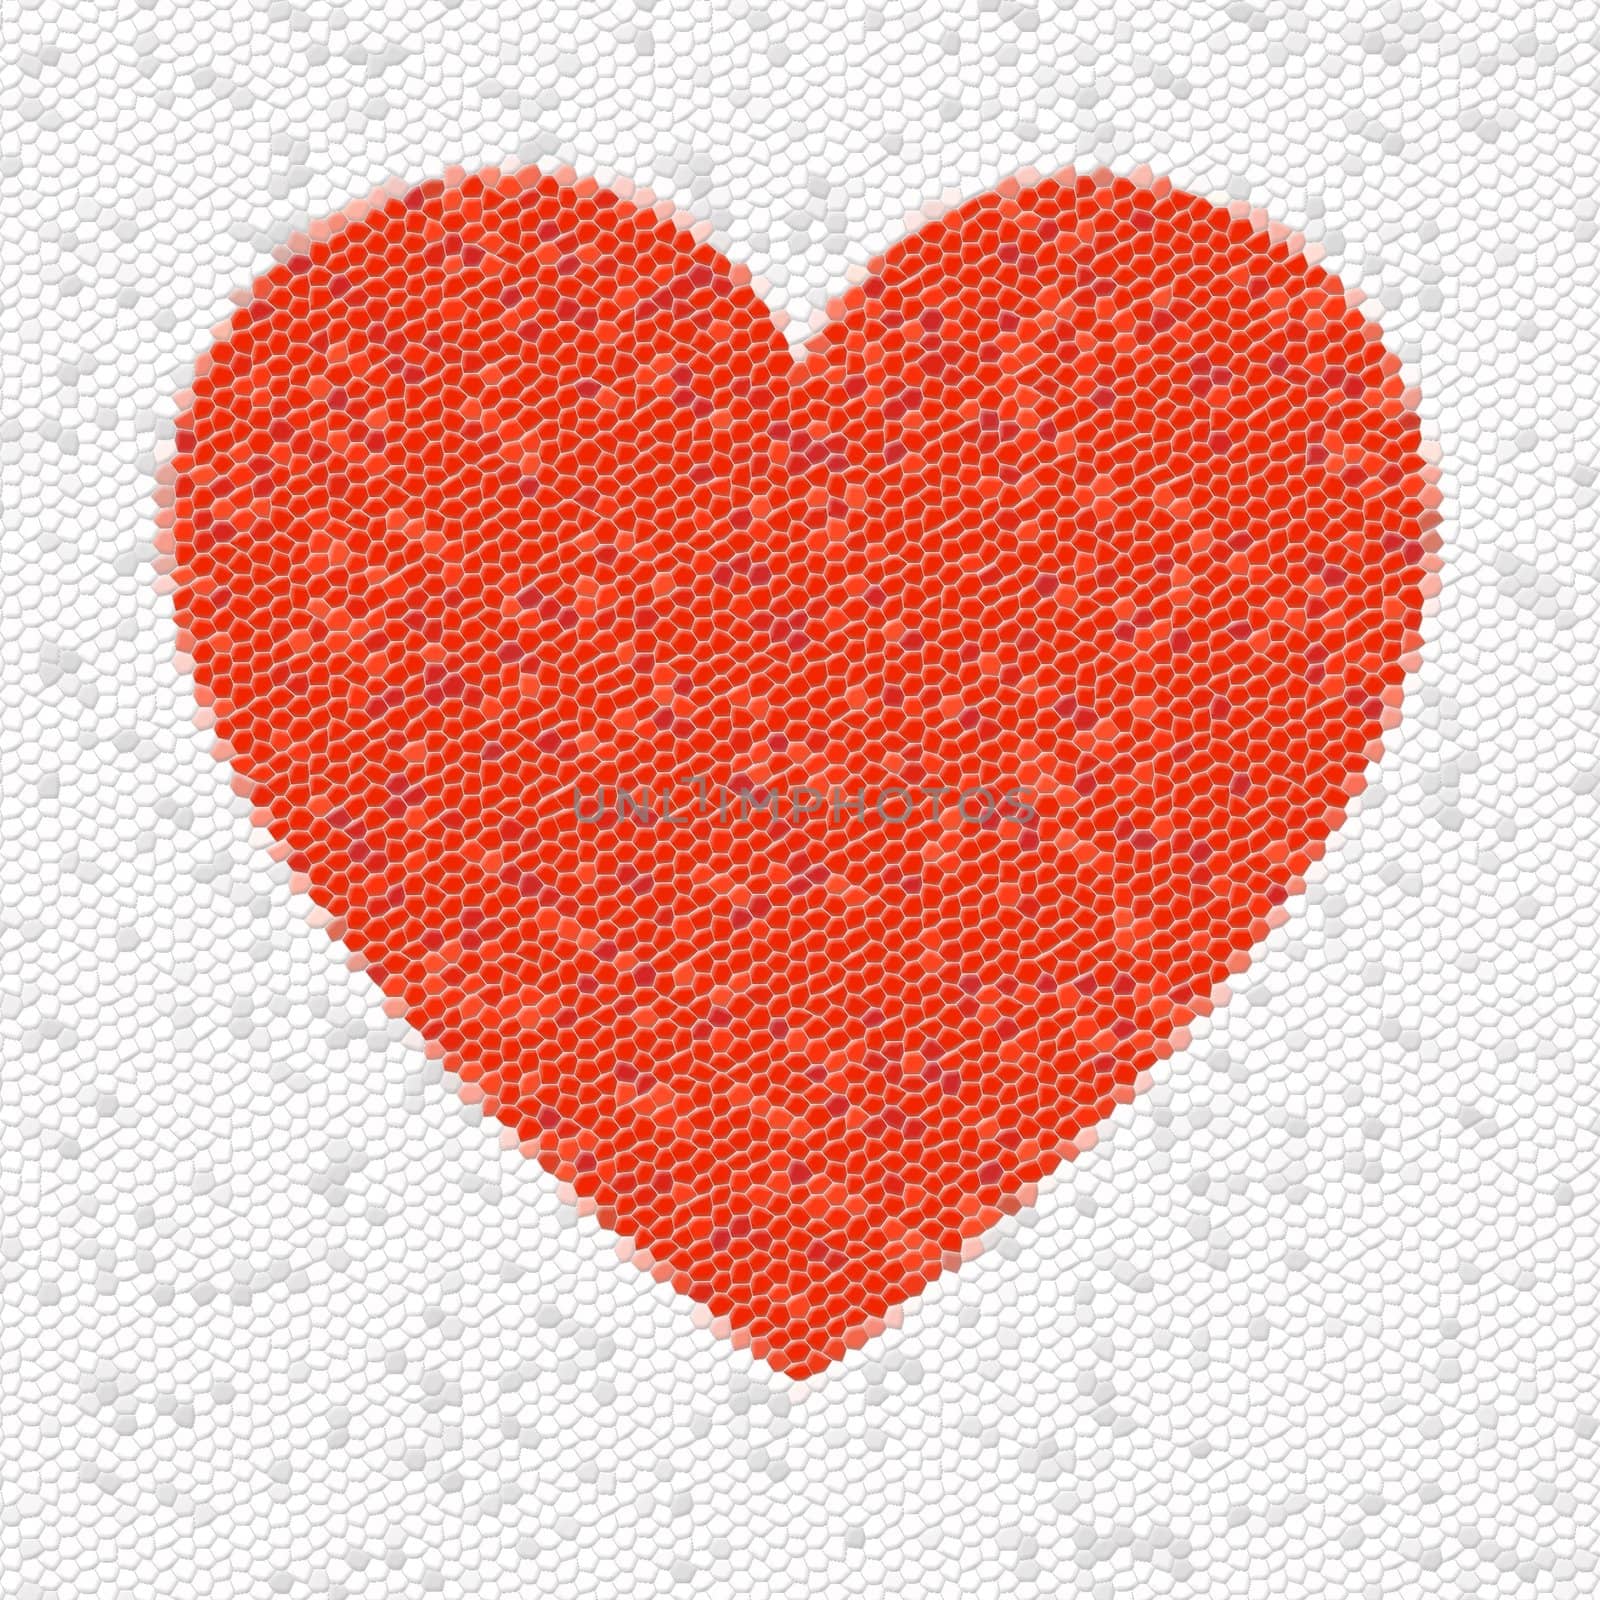 Heart Mosaic Hexagons by hlehnerer